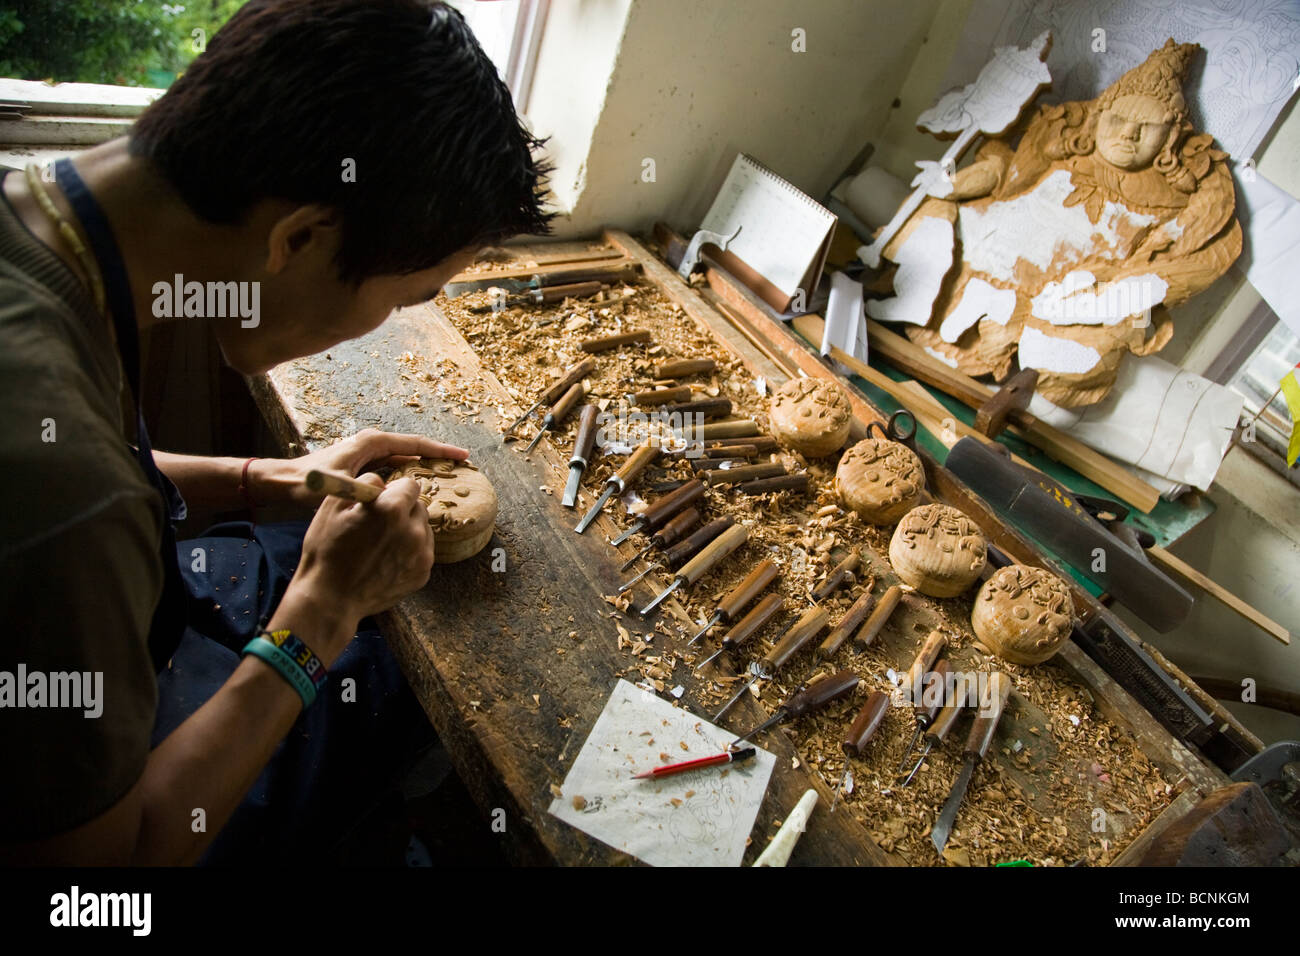 Tibetan refugee working in the woodworking workshop at the Norbulingka Institute. Sidhpur, Dharamsala. Himachal Pradesh. India. Stock Photo